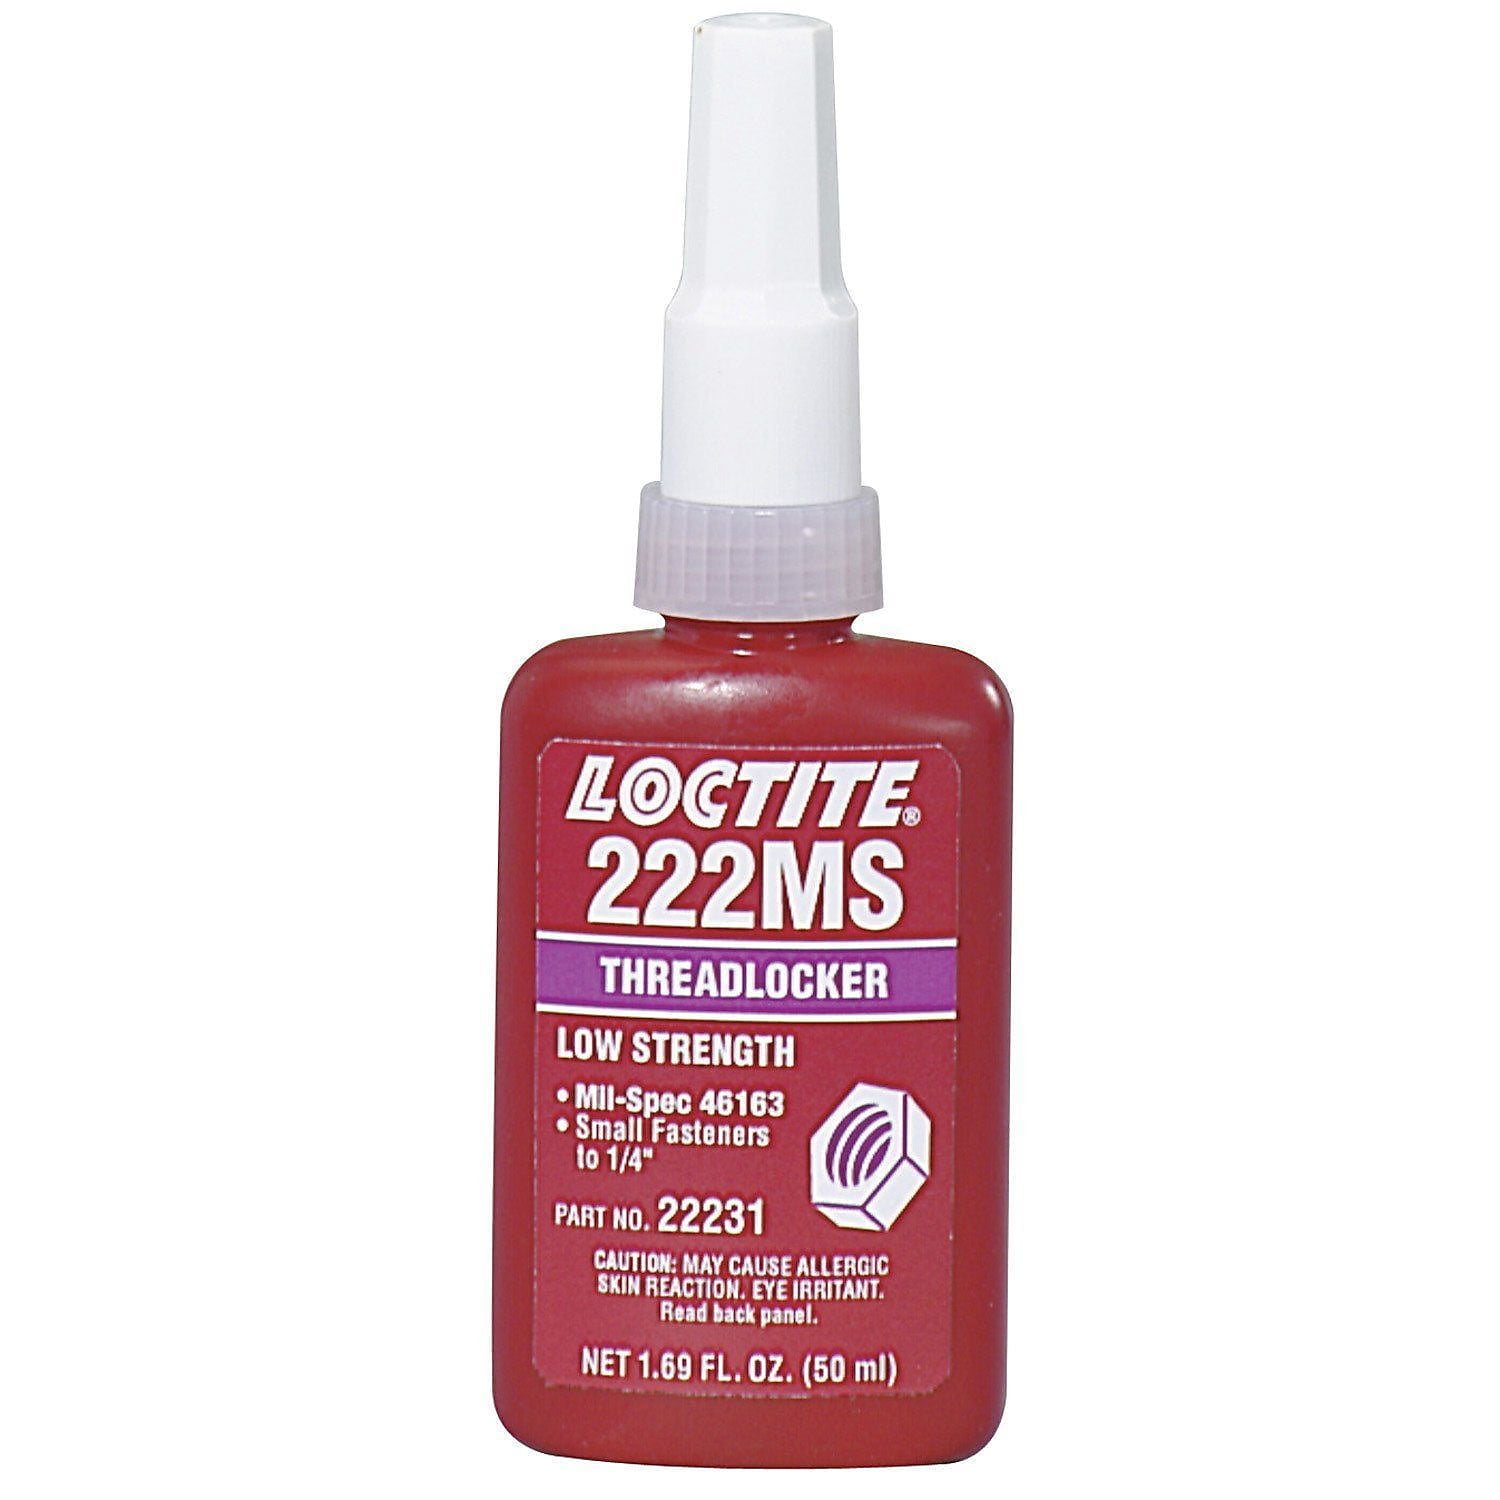 Loctite 222 Anaerobic Adhesive Threadlocker Purple 10ml